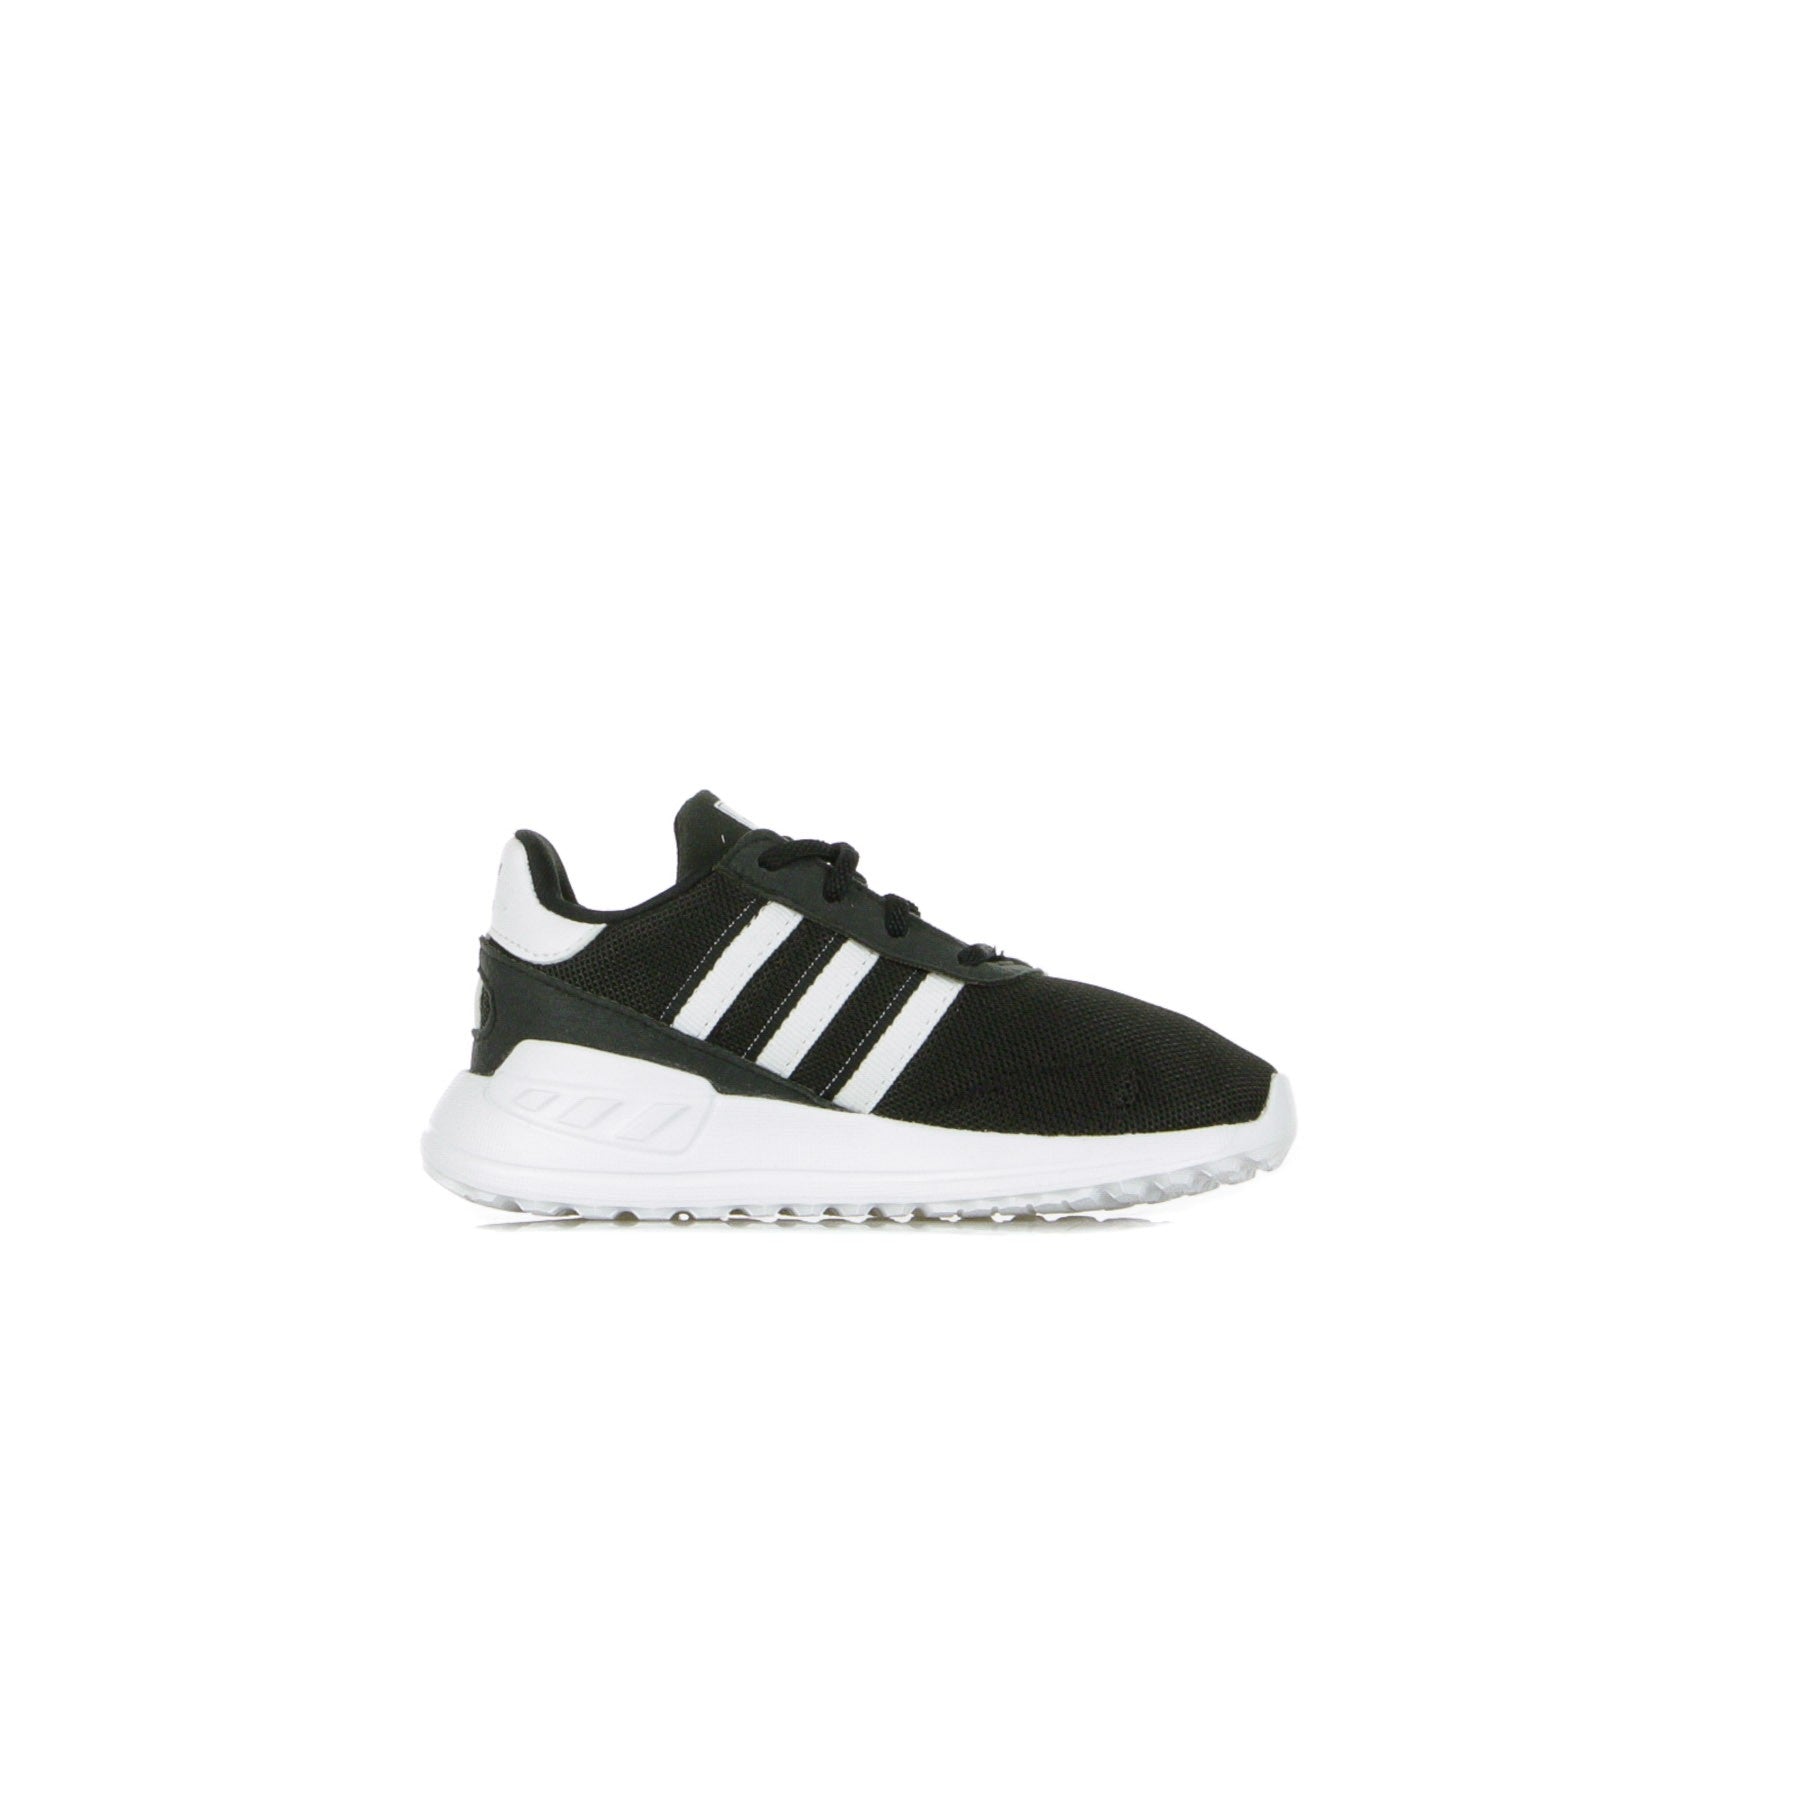 La Trainer Lite El I Core Black/white/core Black Child Low Shoe